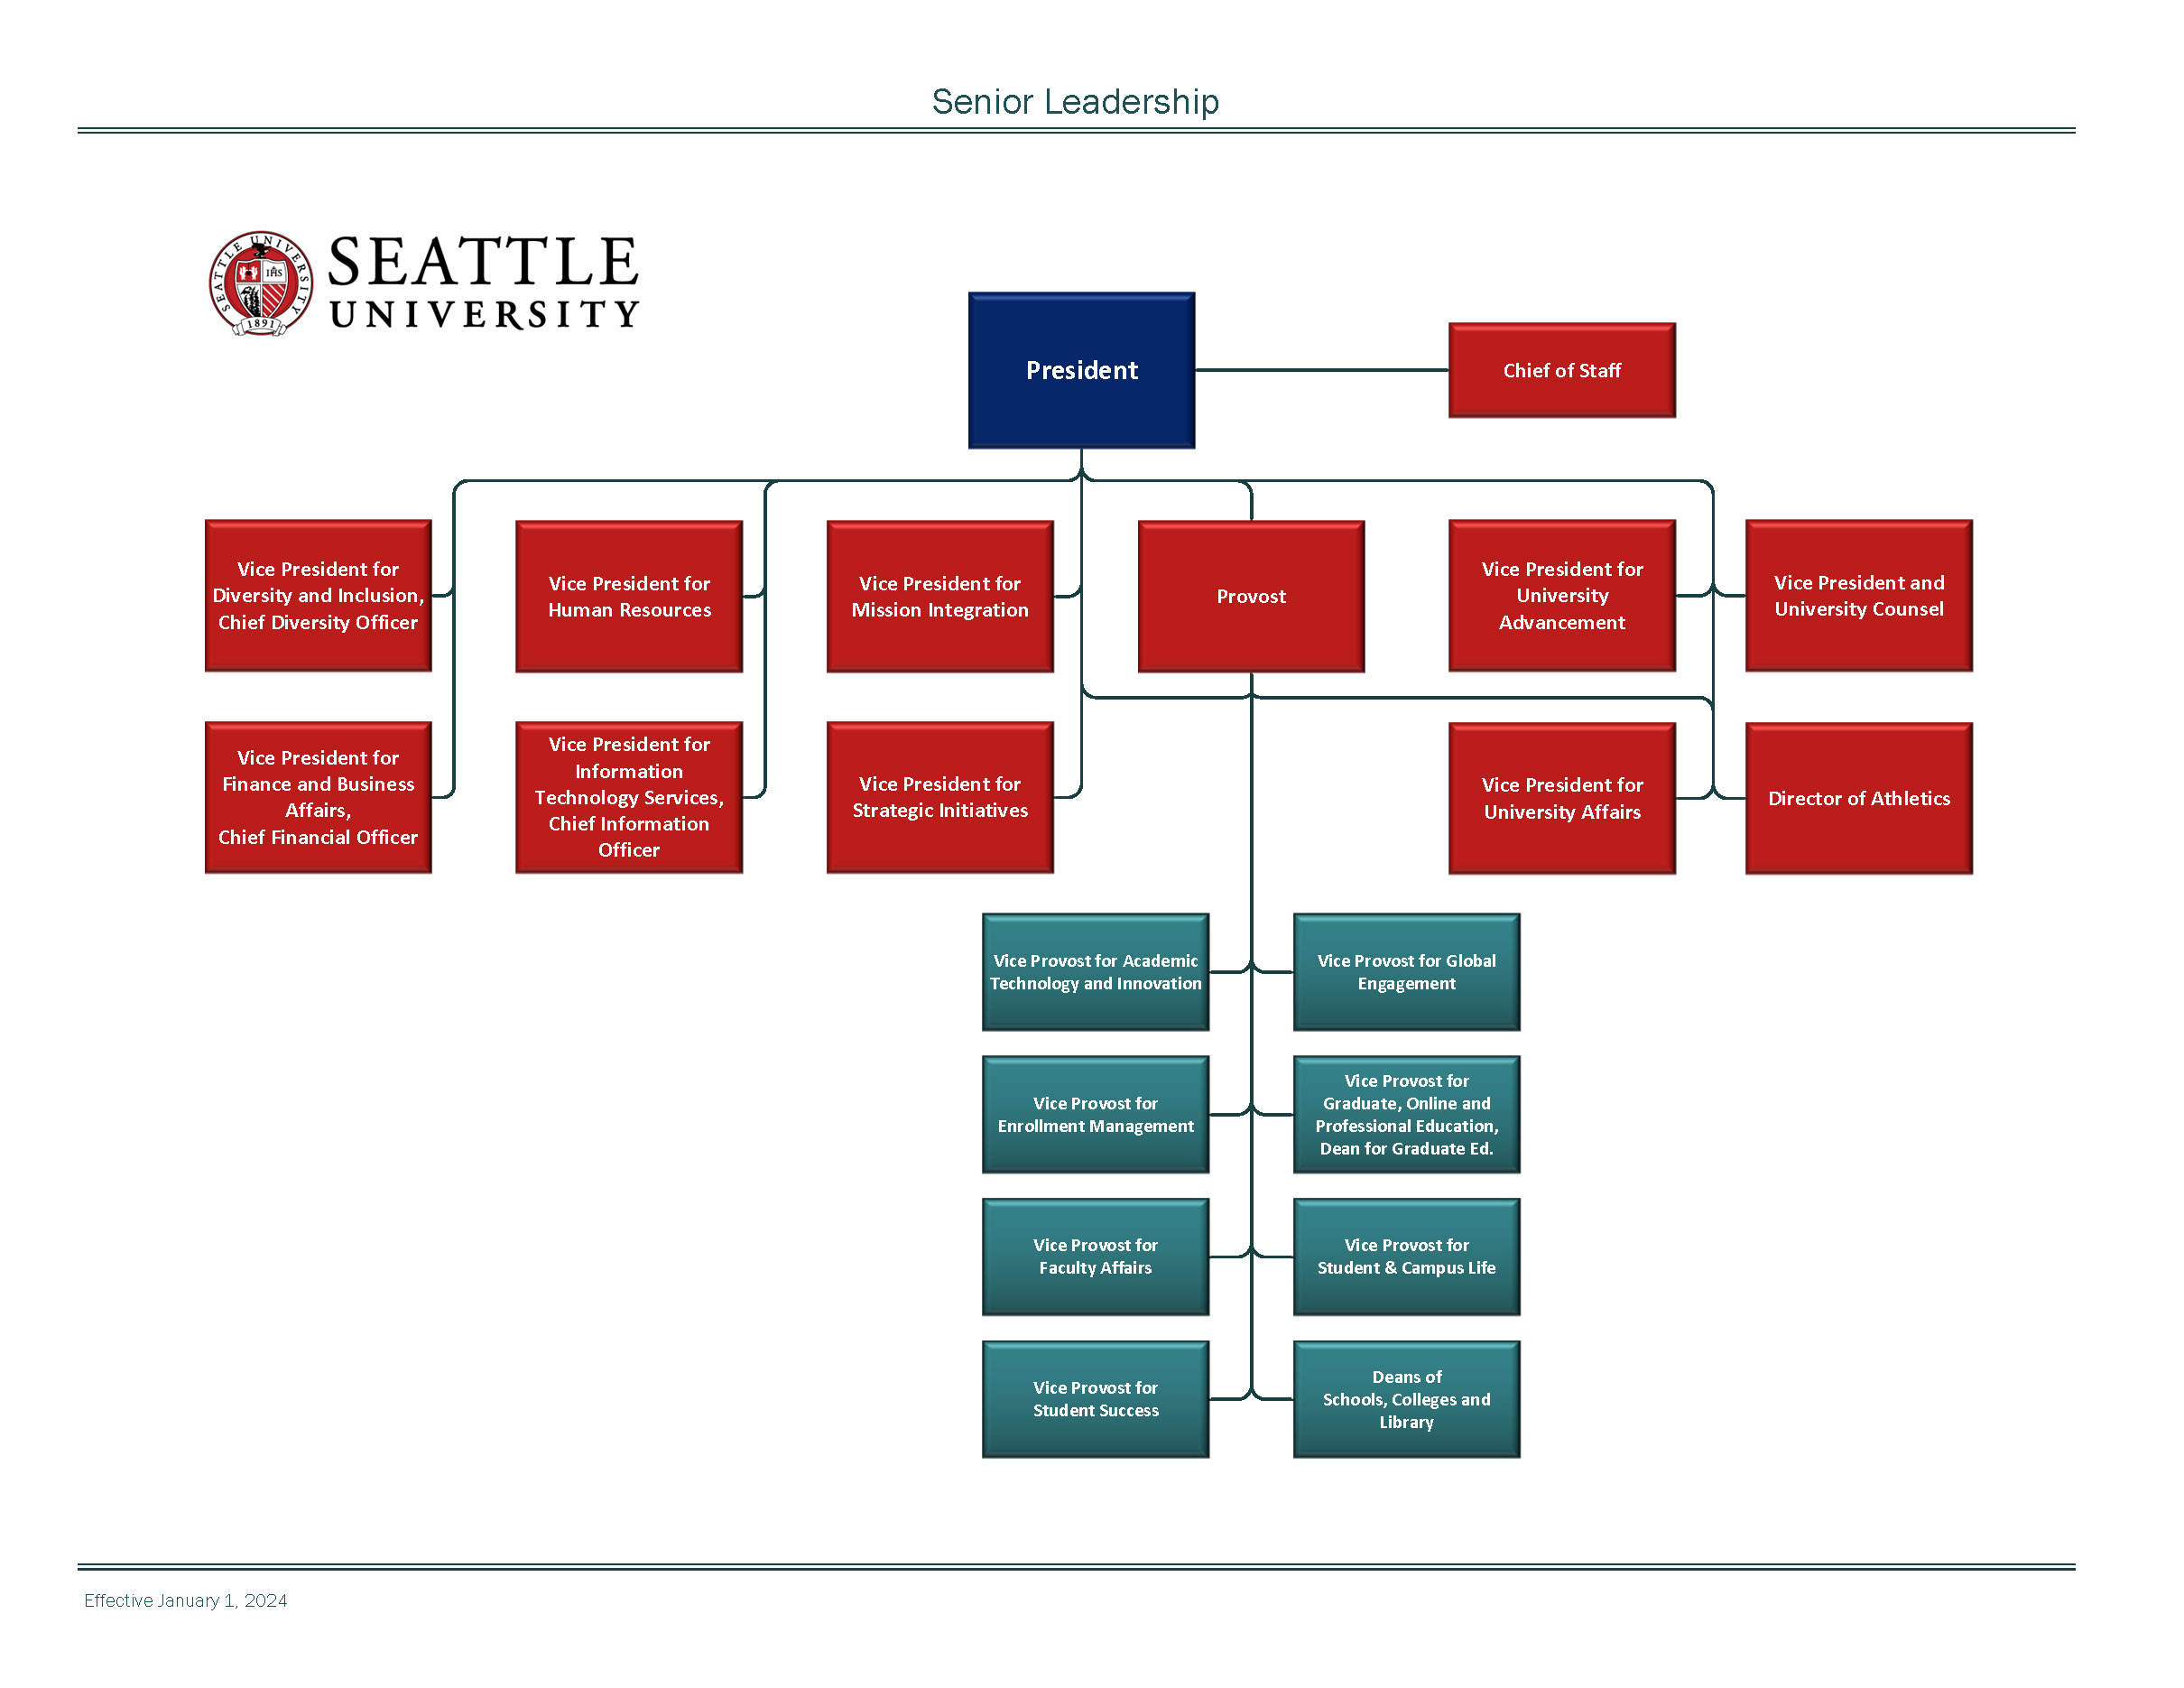 Seattle University Senior Leadership organizational chart